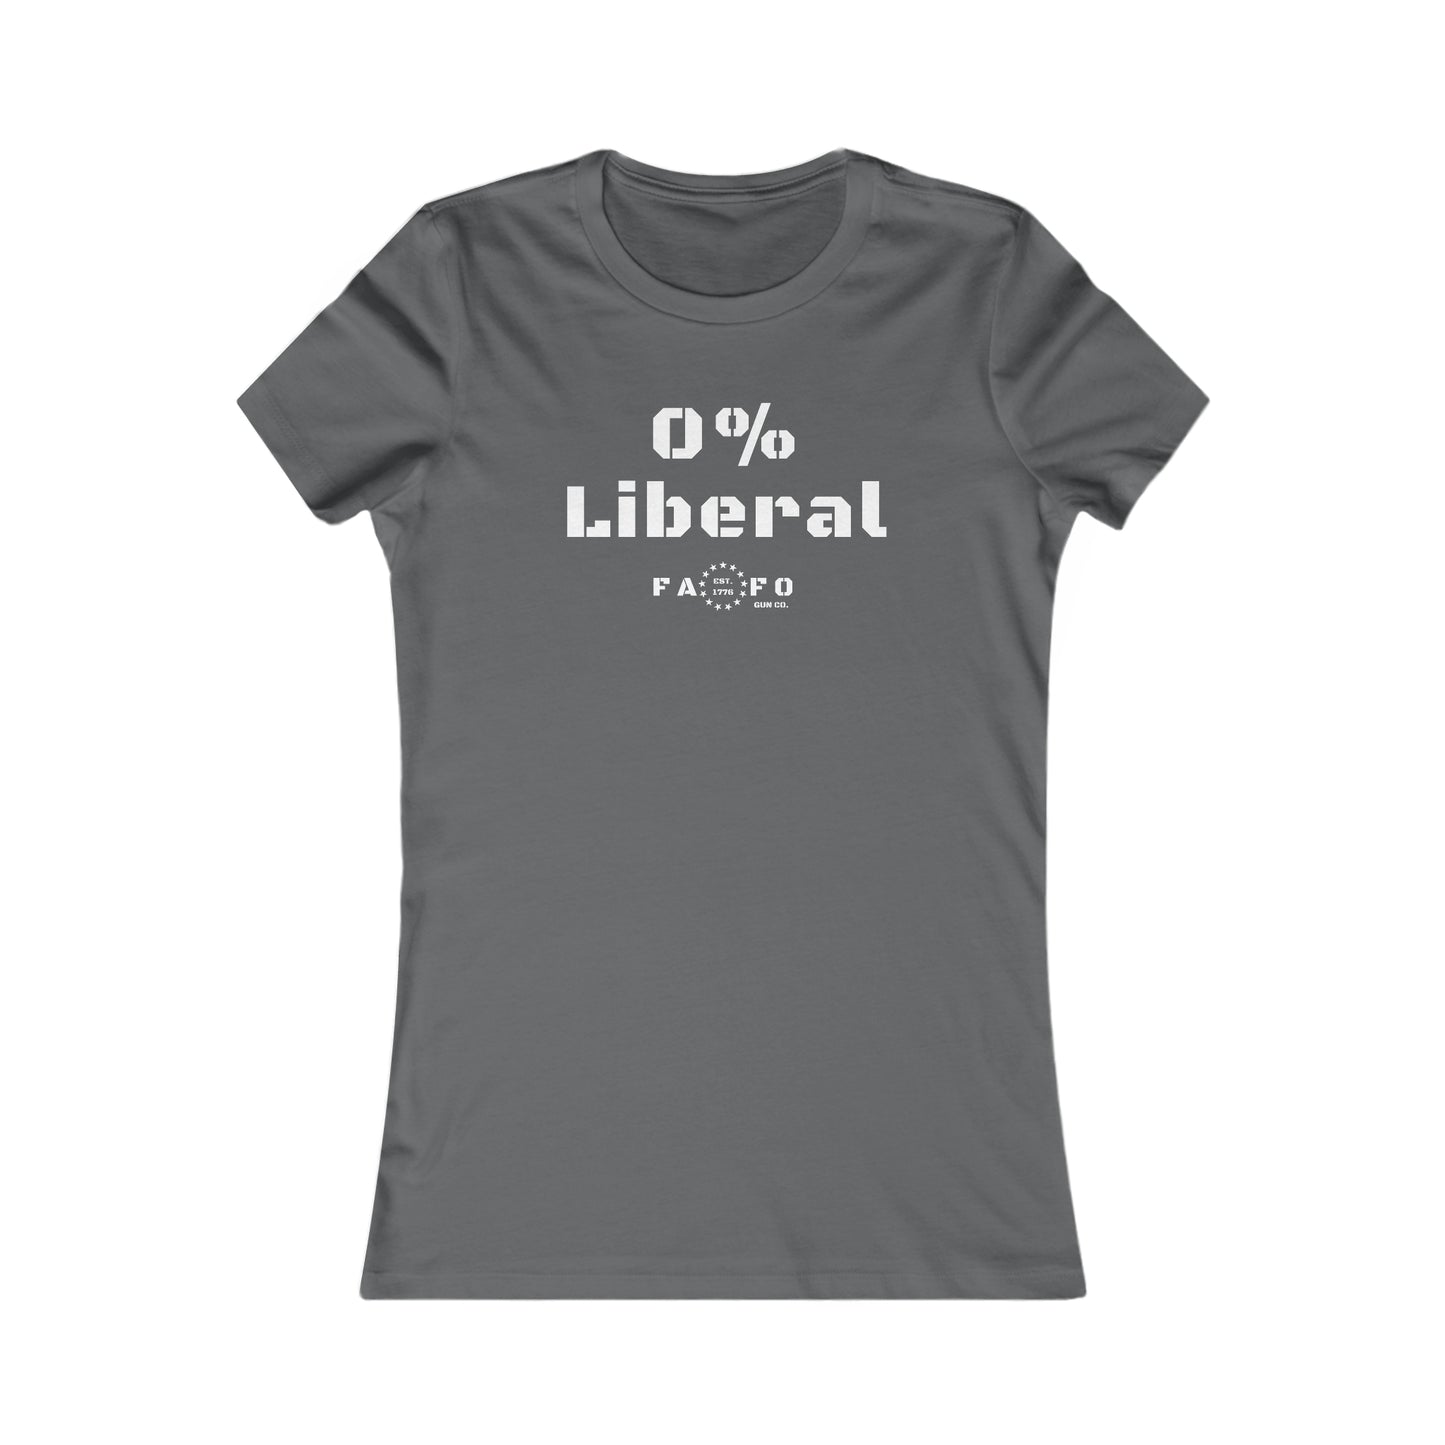 Women's "0% Liberal" Tee